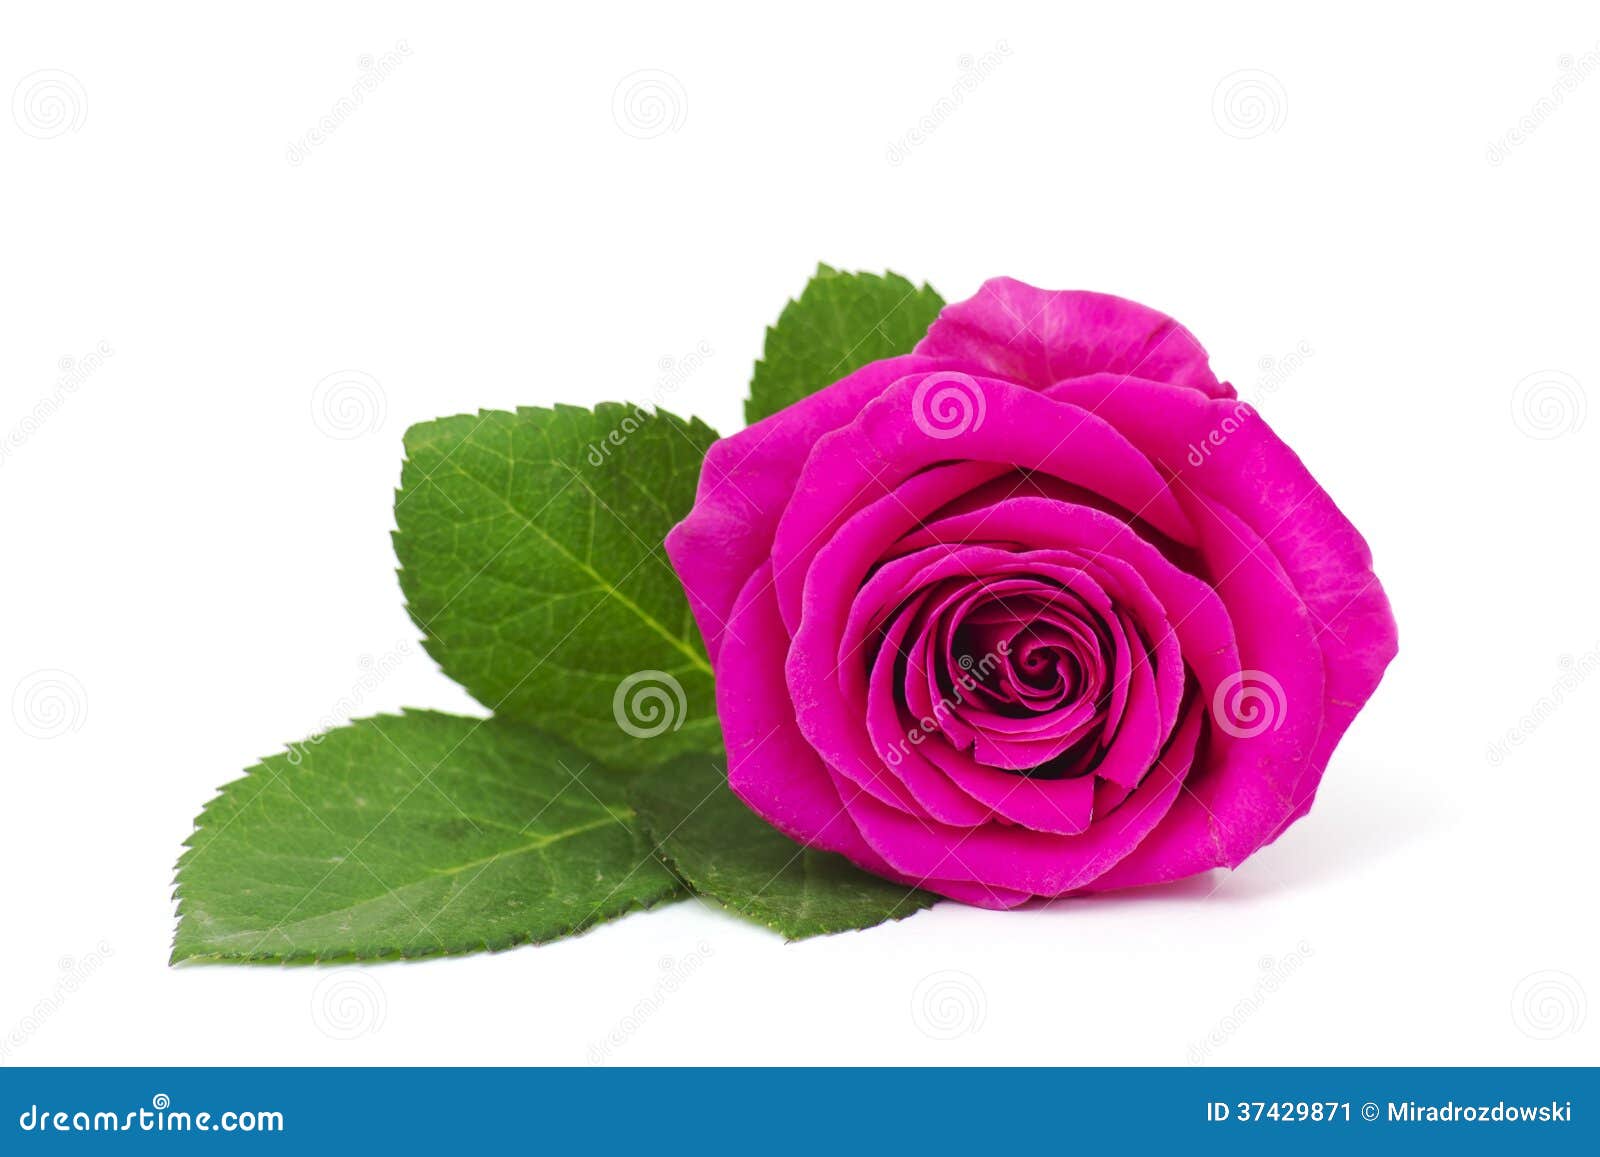 Pink rose stock image. Image of birthday, petal, blooming - 37429871